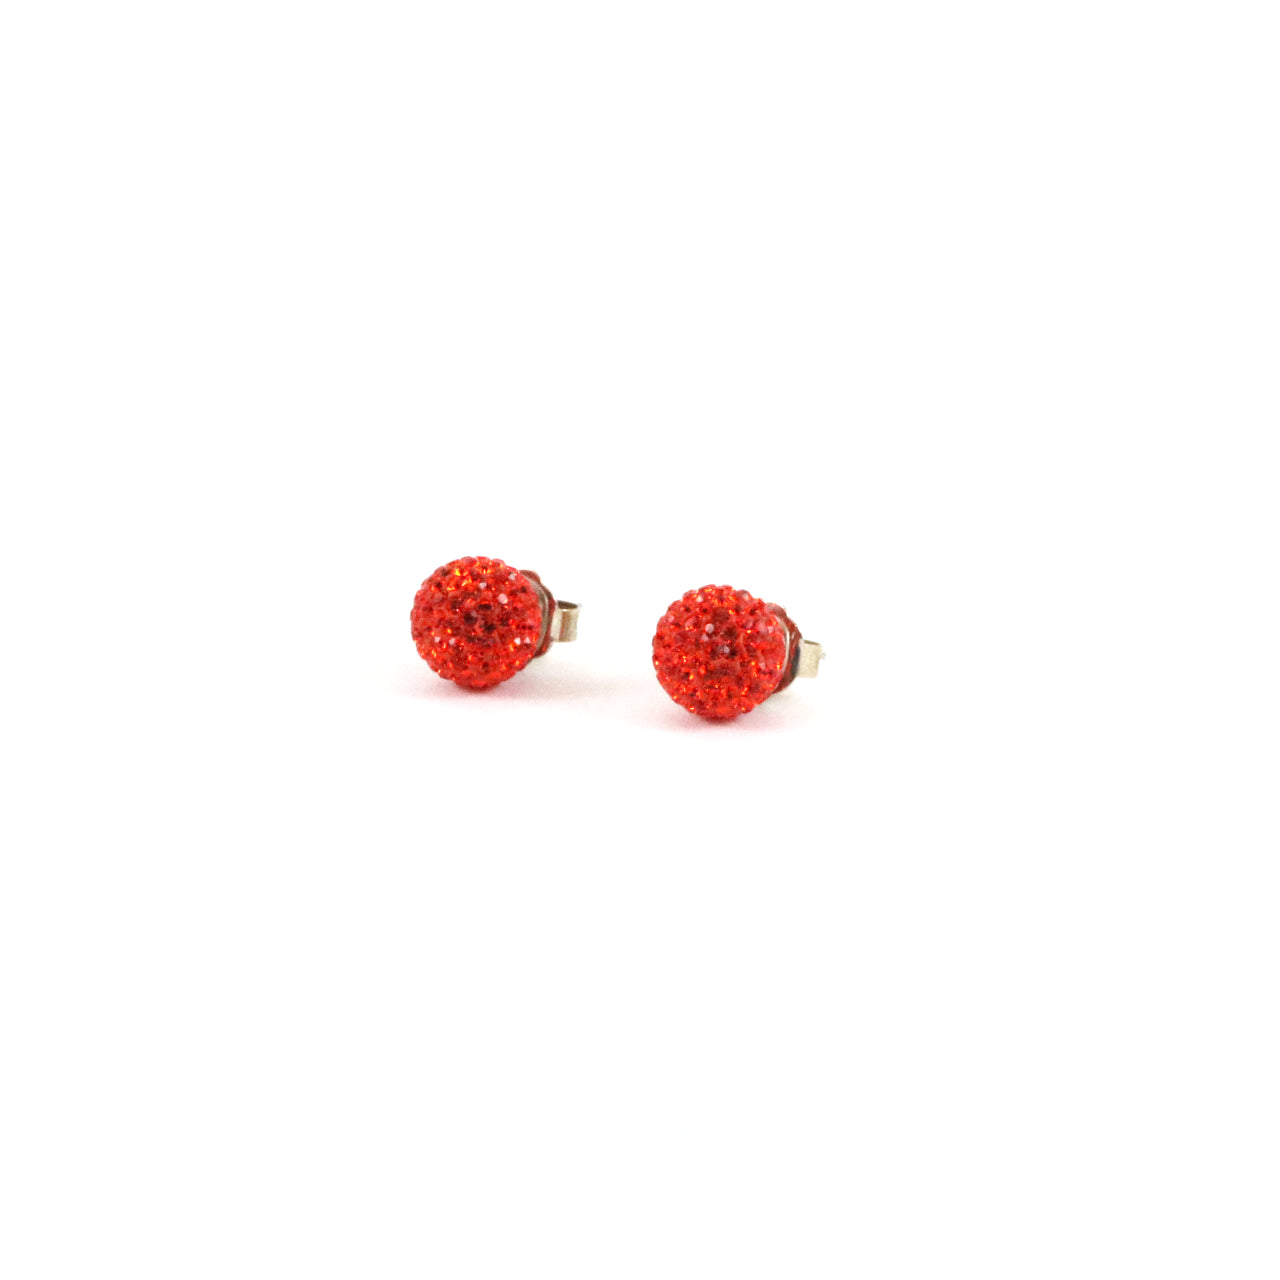 Red Sparkle Ball Earrings